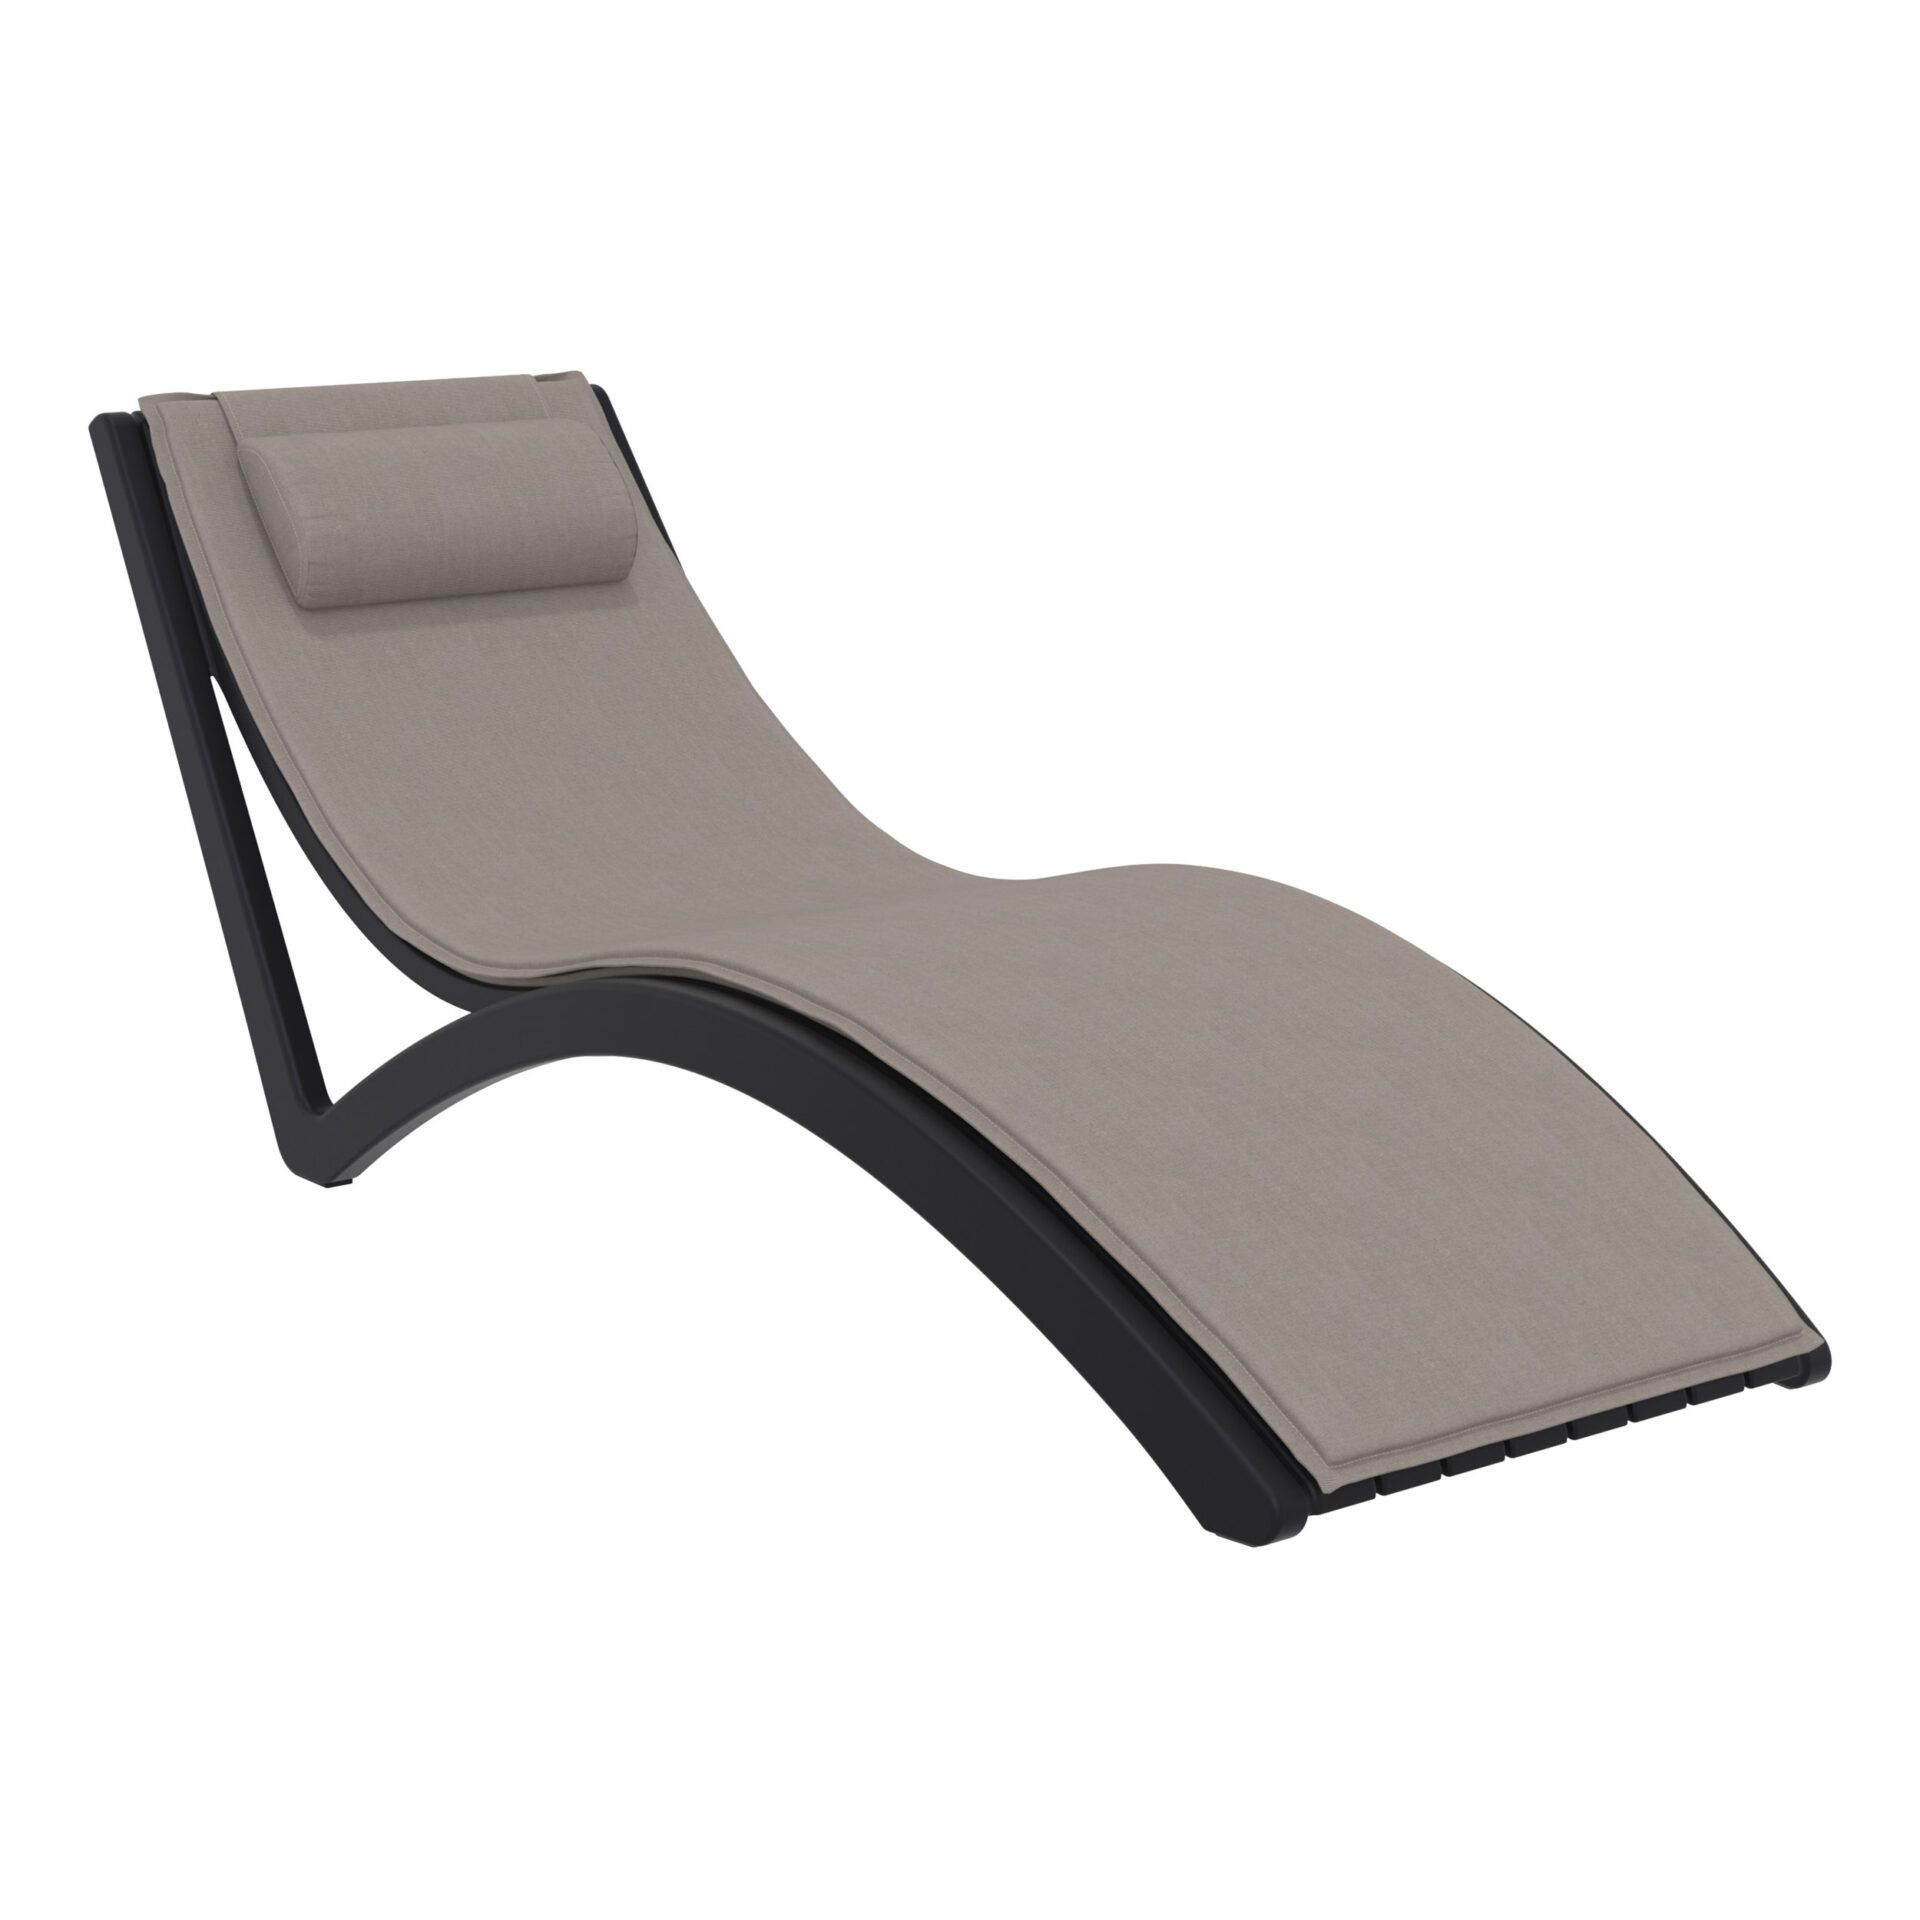 outdoor polypropylene slim sunlounger pillow cushion black brown front side